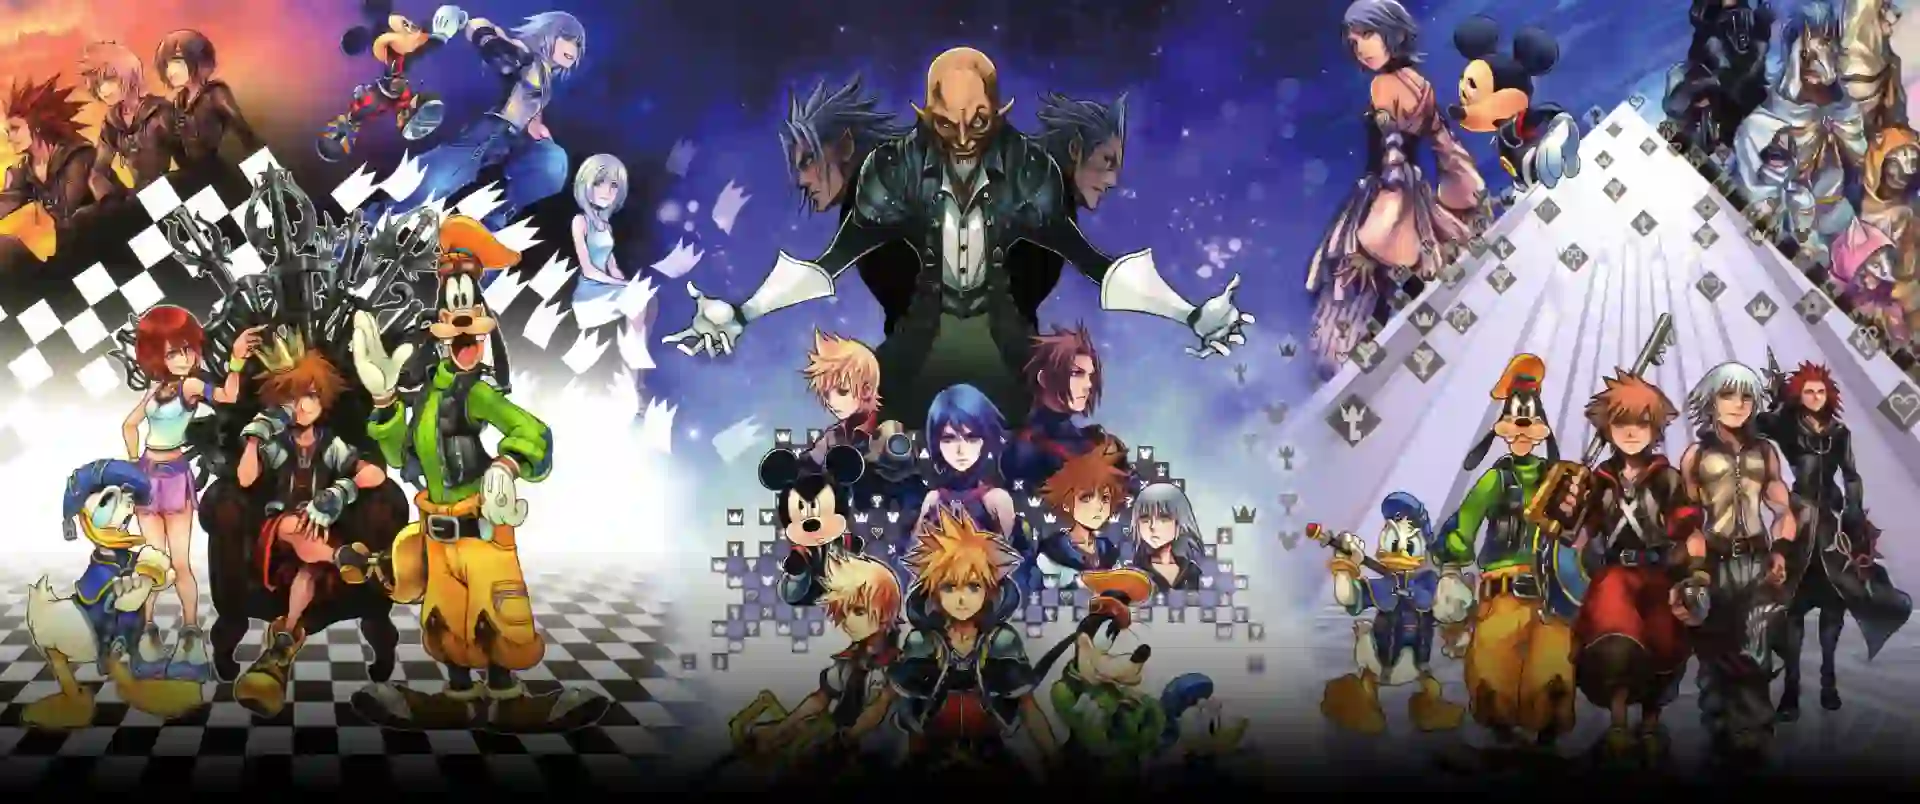 Paradox Cups Olympus Coliseum Kingdom Hearts Ii Final Mix Kingdom Hearts Hd 2 5 Remix Gamer Guides